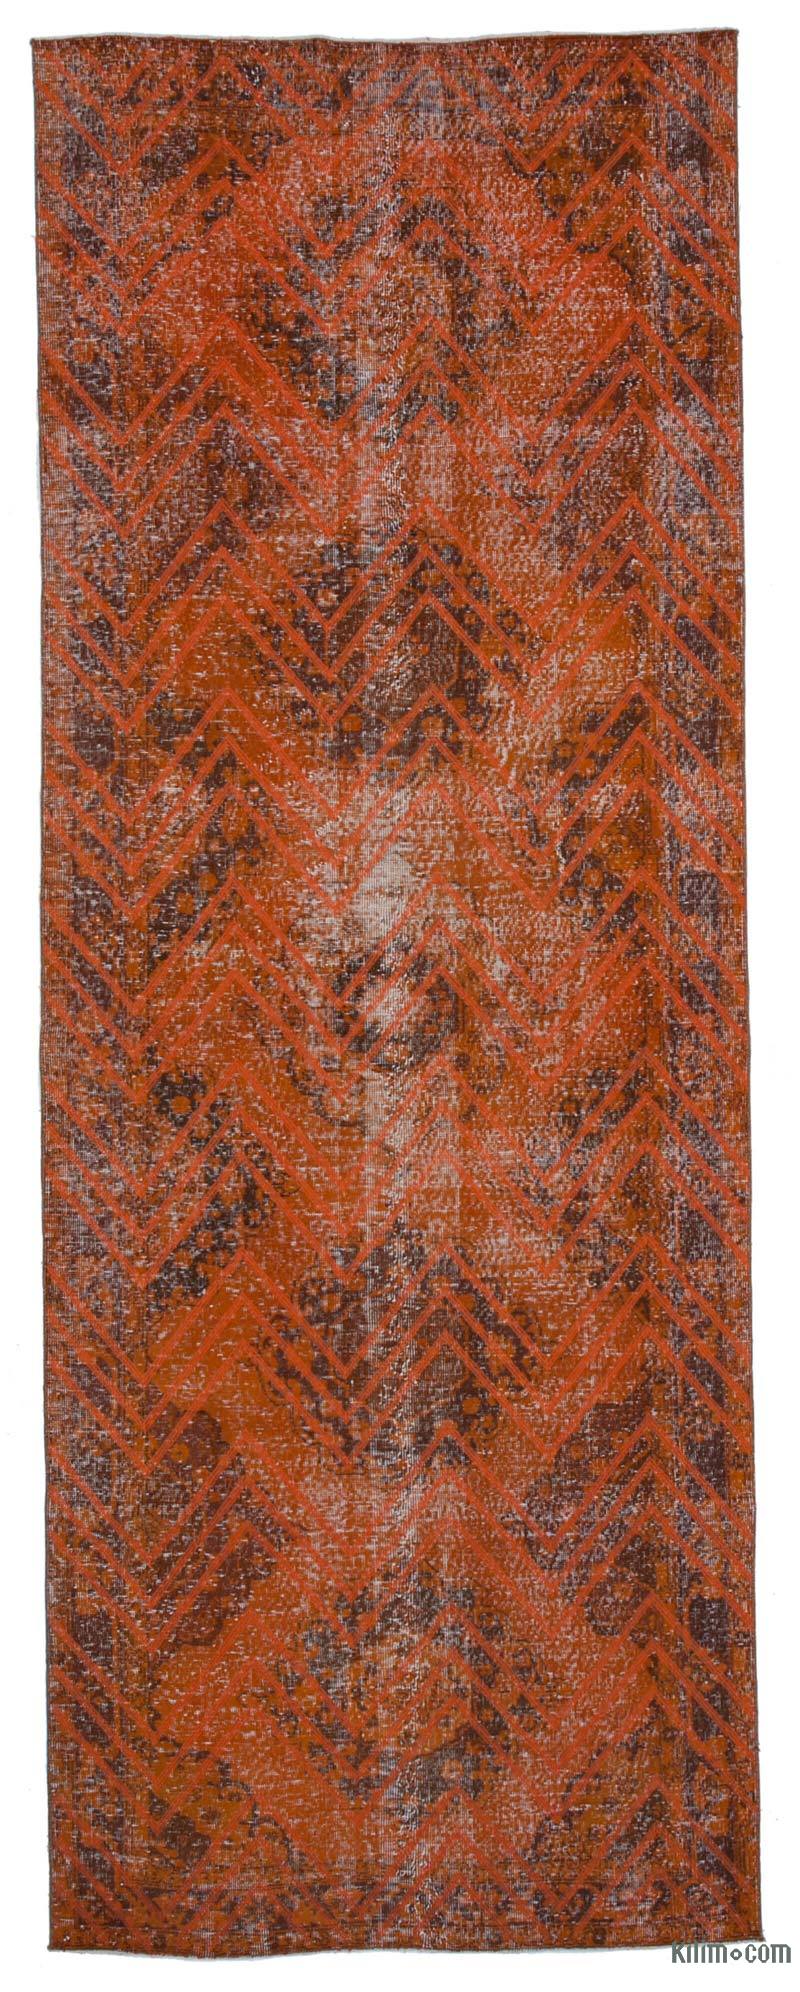 Naranja Alfombra Turca bordada sobre teñida vintage - 138 cm x 382 cm - K0038643